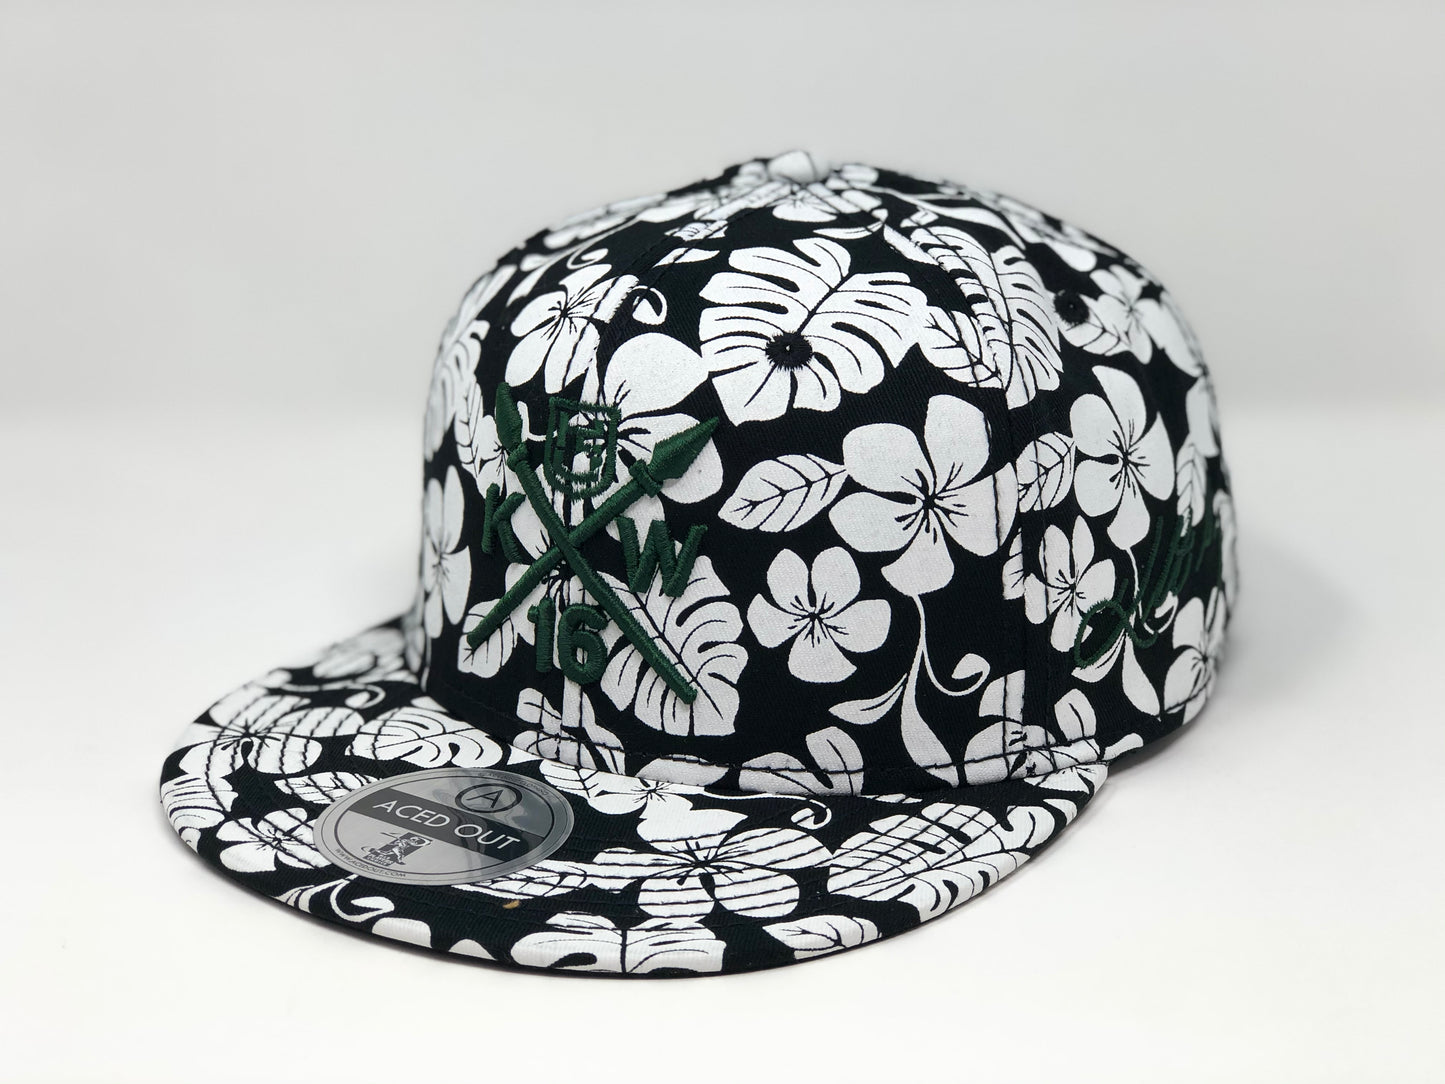 Kolten Wong KW16 Green Compass Hat - Black/White Aloha Snapback - Limited Edition of 16